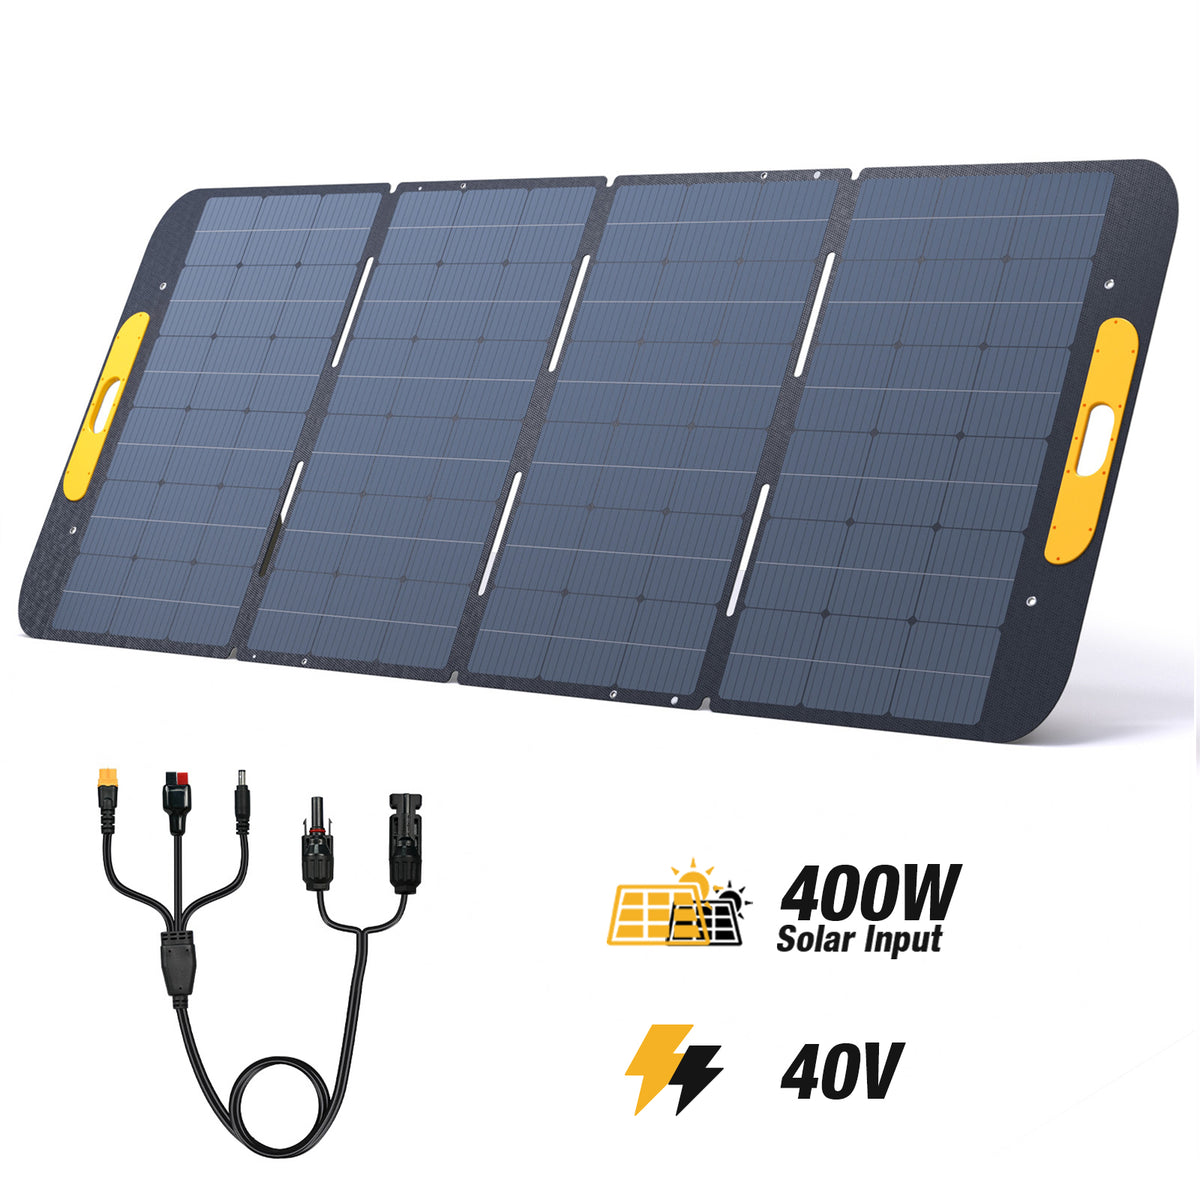 VTOMAN 110W 40V solar panel